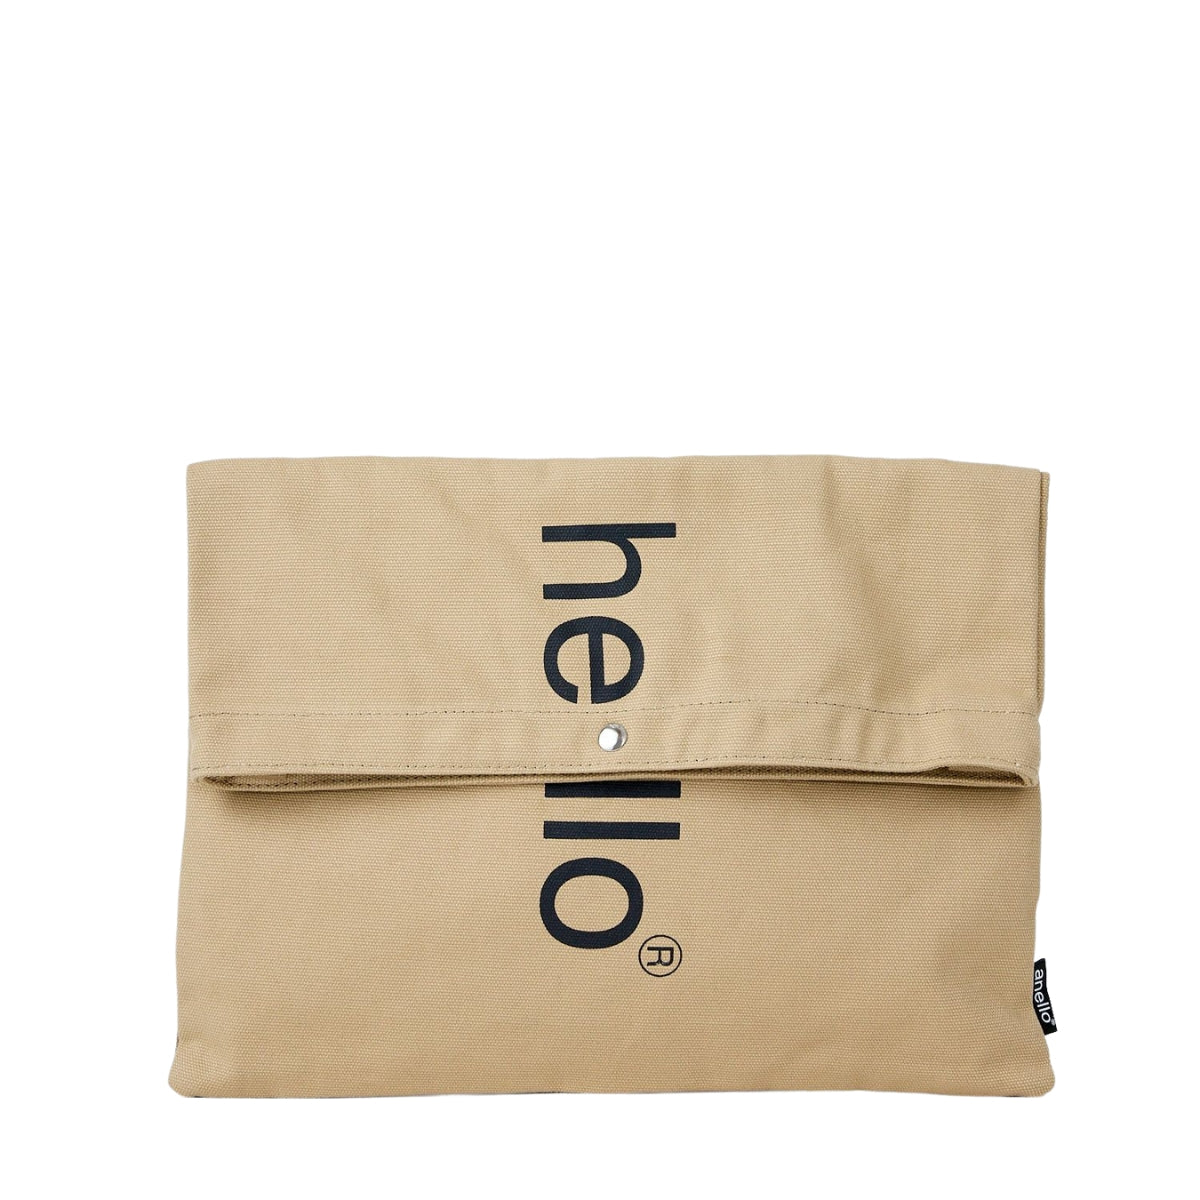 Anello Hello 3 Way Shoulder Bag in Beige